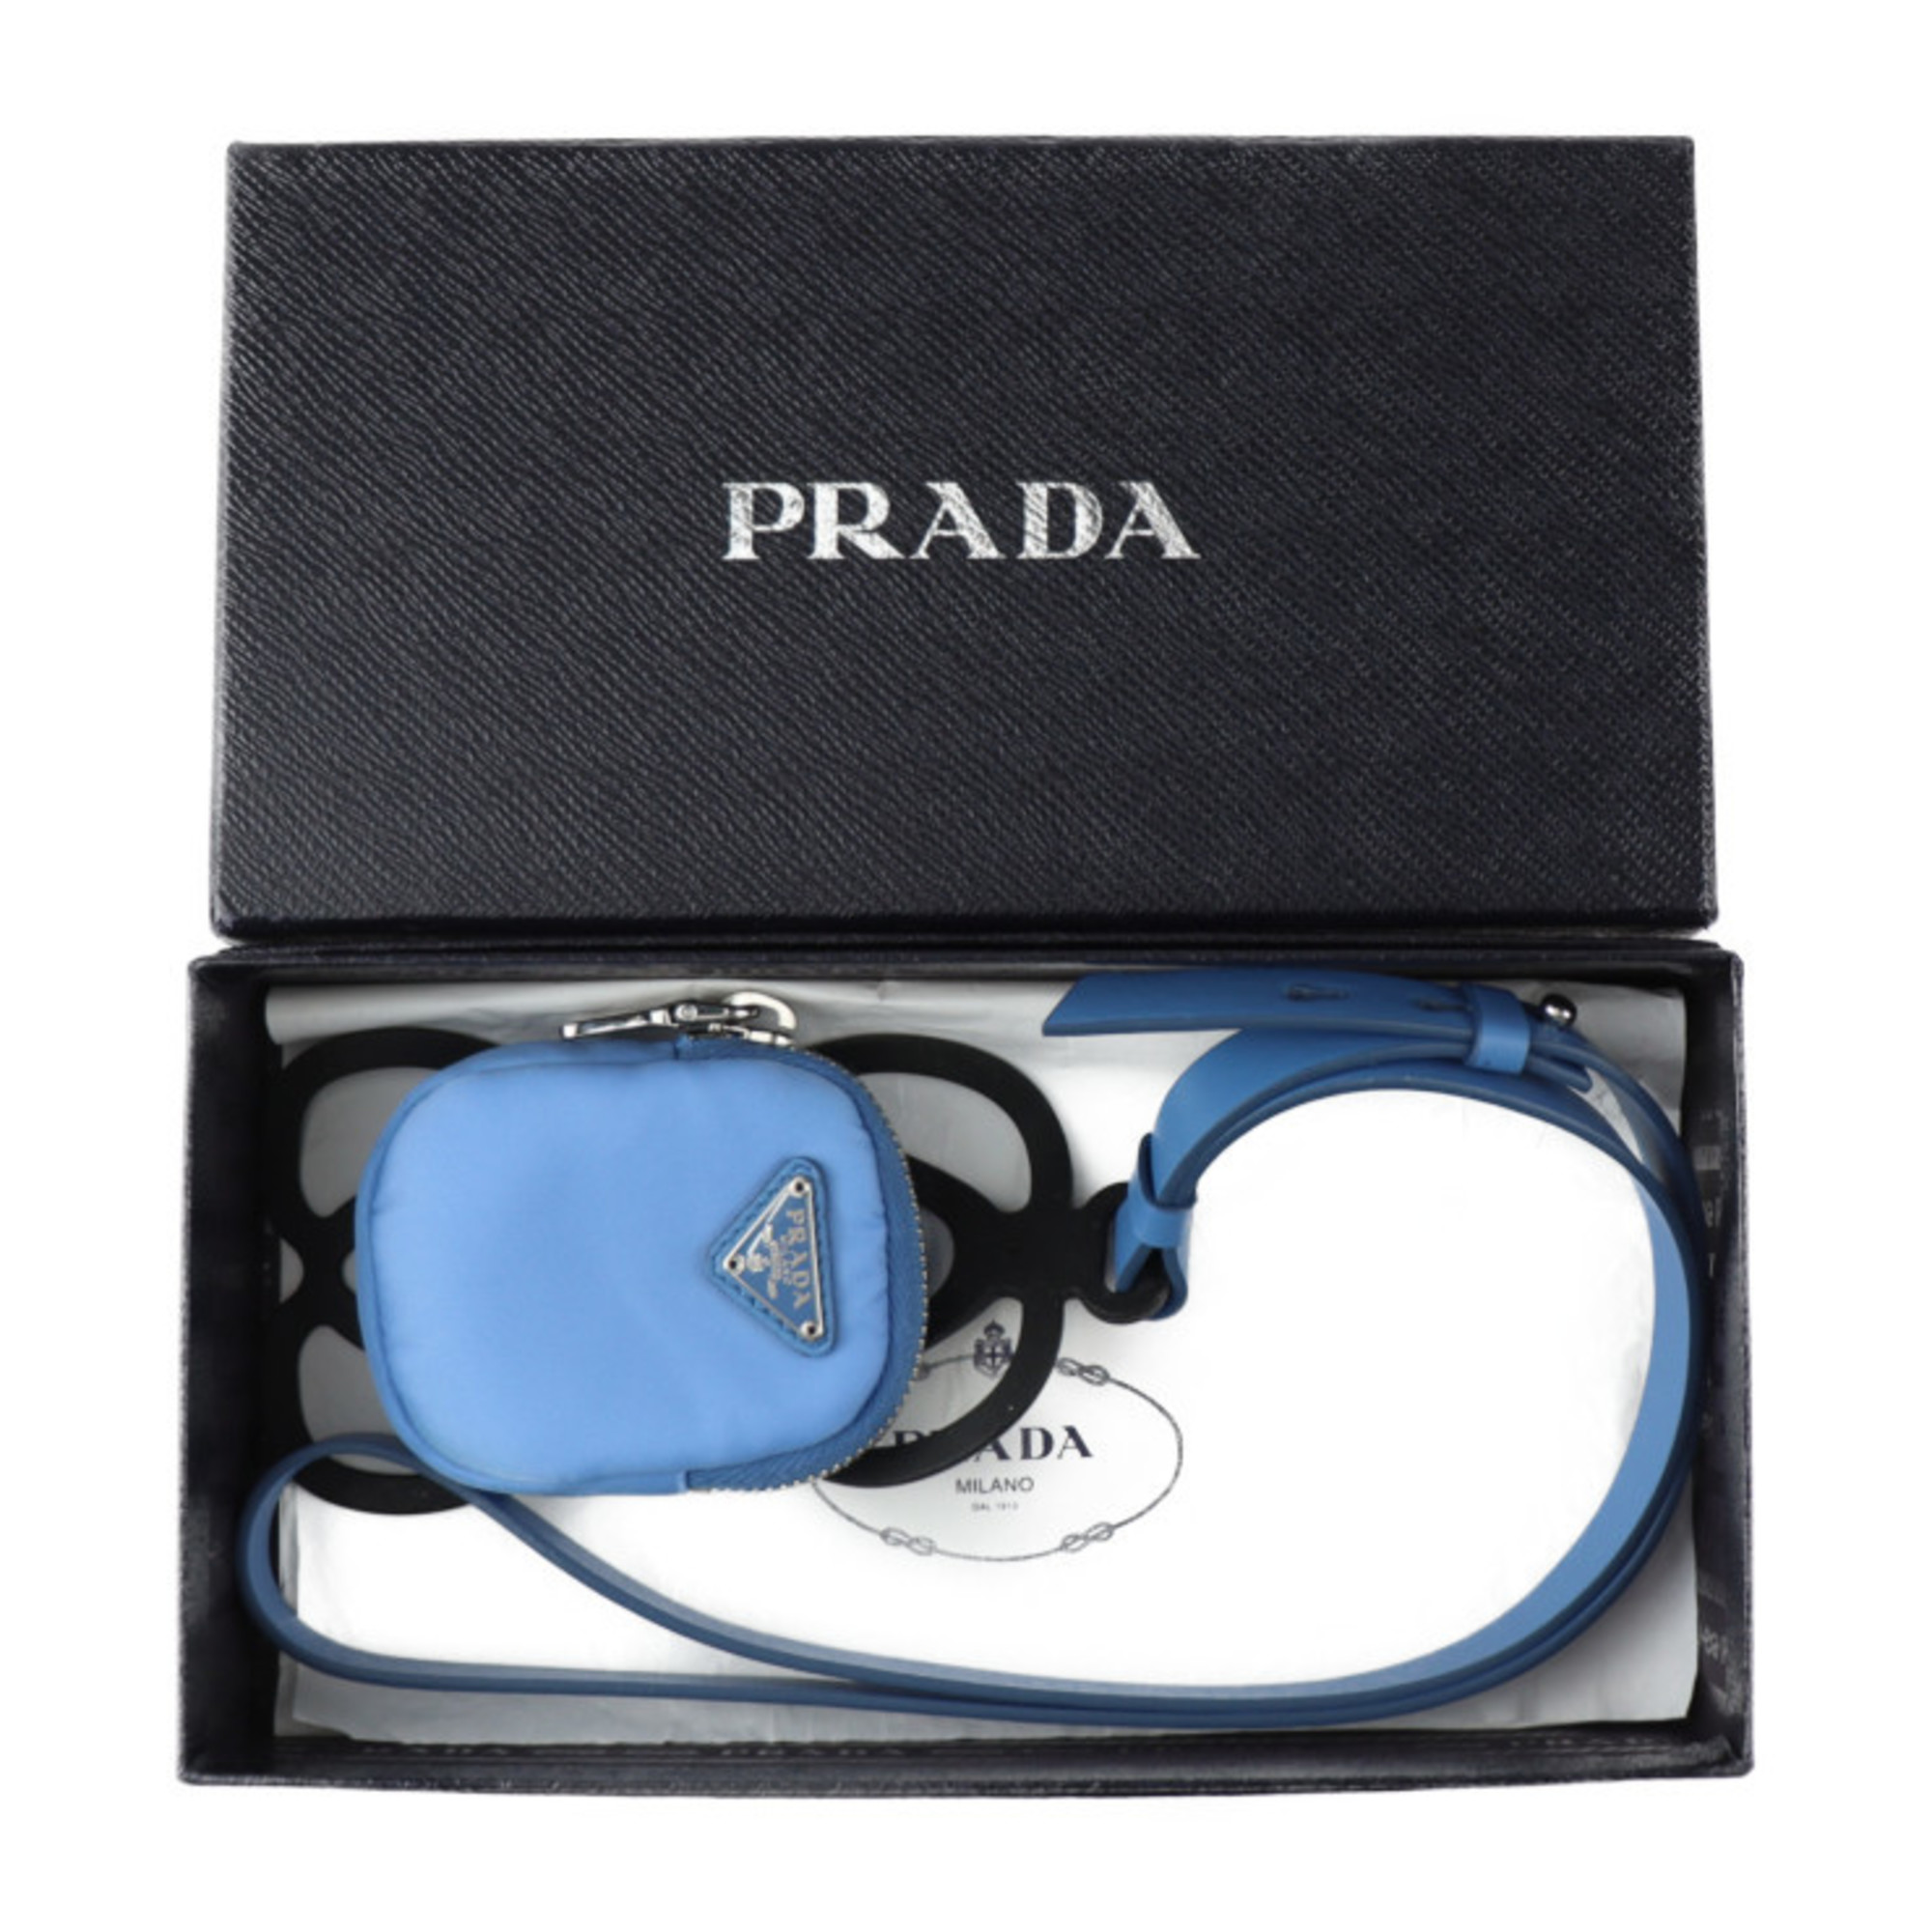 PRADA Prada Phone Holder Other Accessories 1ZT001 Nylon Leather Rubber PERVINCA Light Blue Silver Metal Fittings Neck Strap Smartphone Multi Case Included